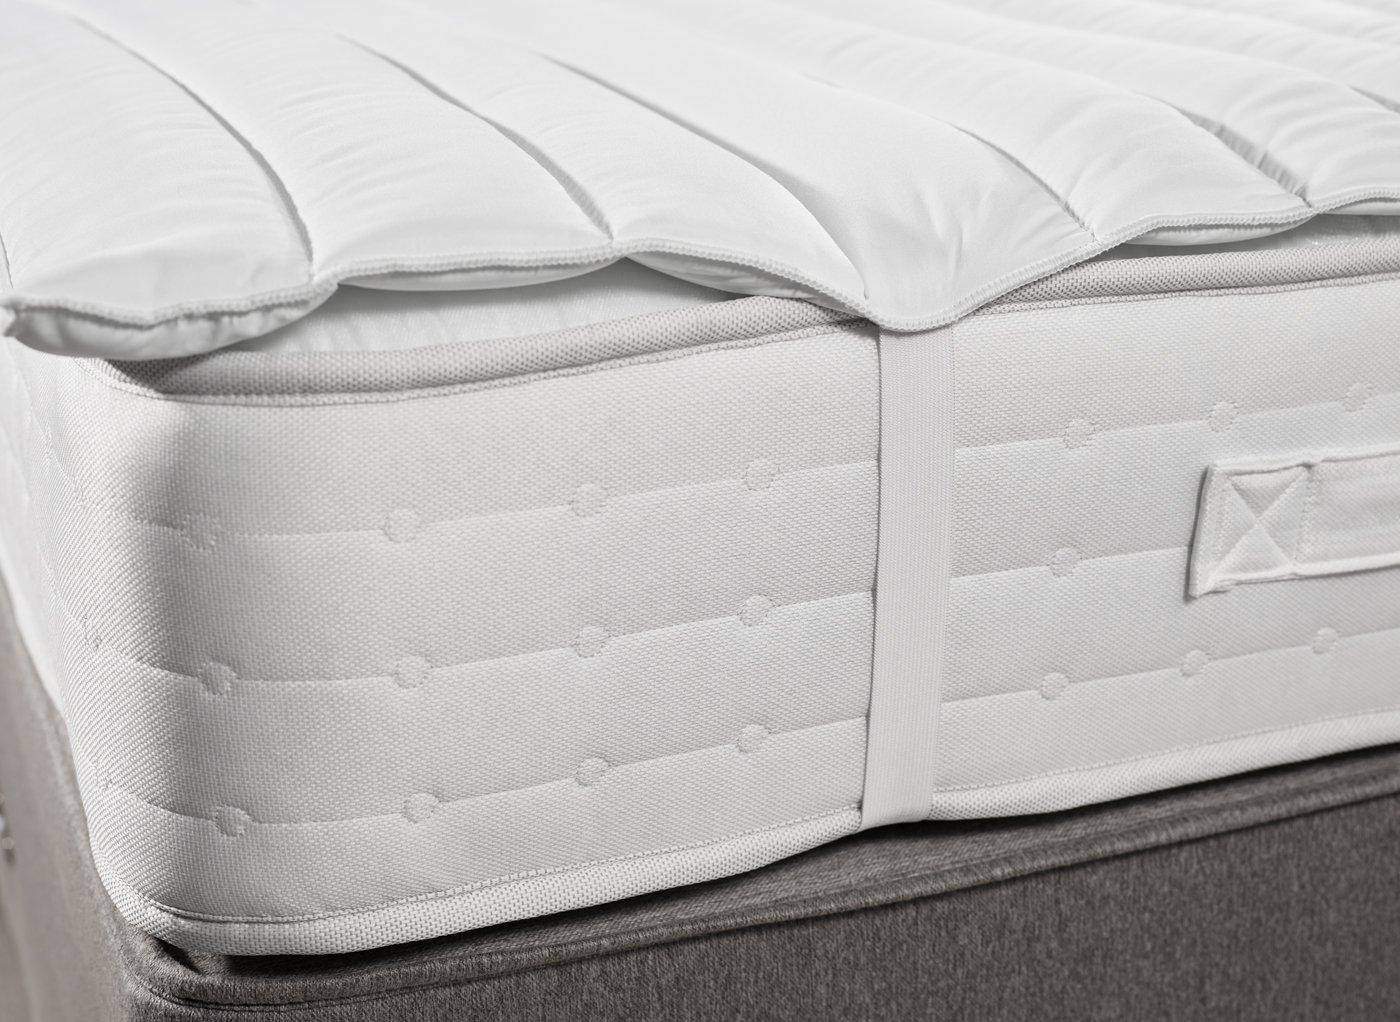 claritin anti-allergy mattress protector king size